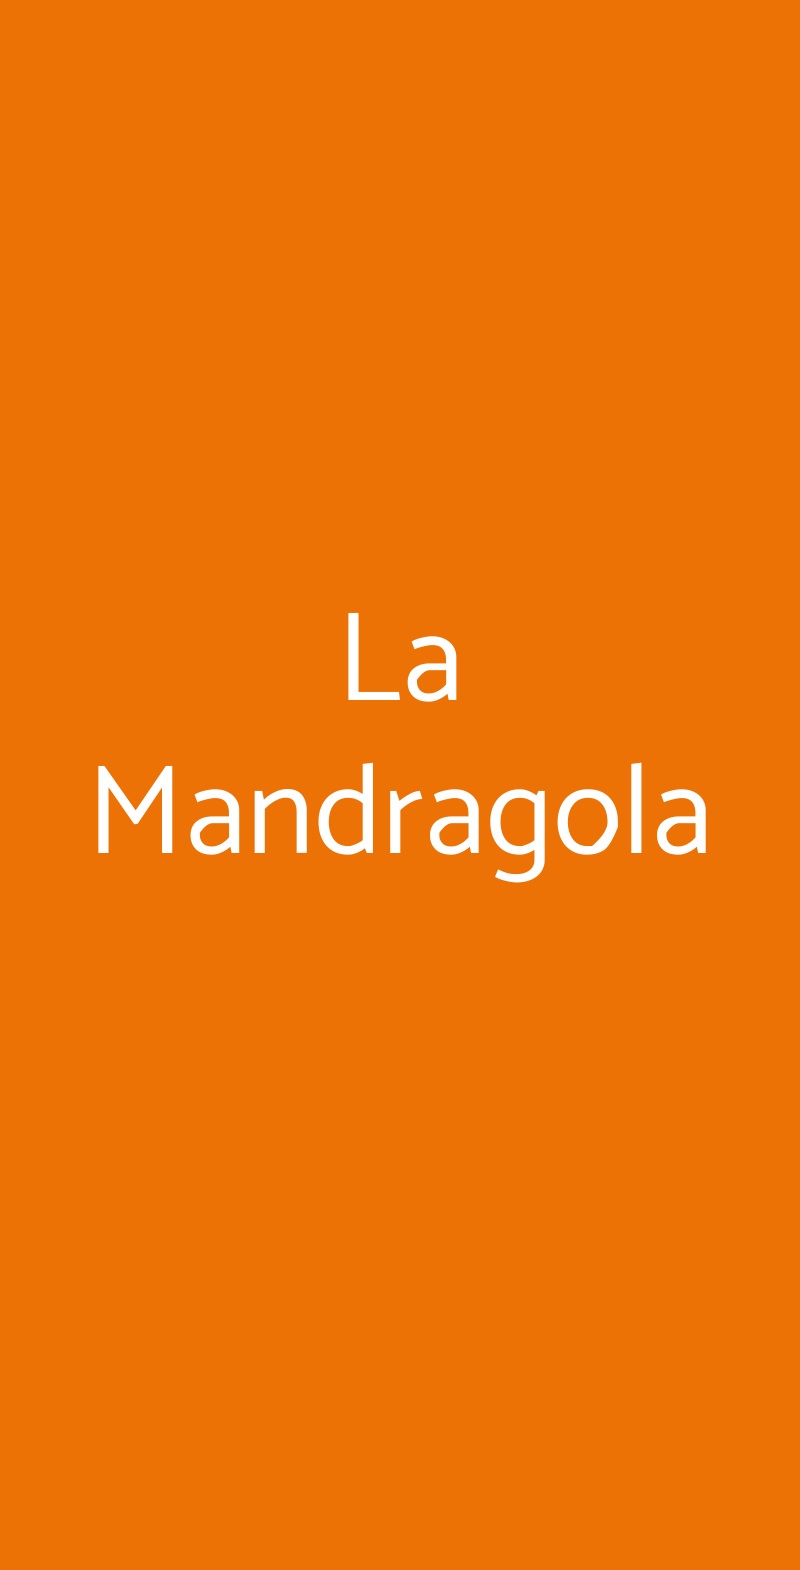 La Mandragola Montecatini Terme menù 1 pagina